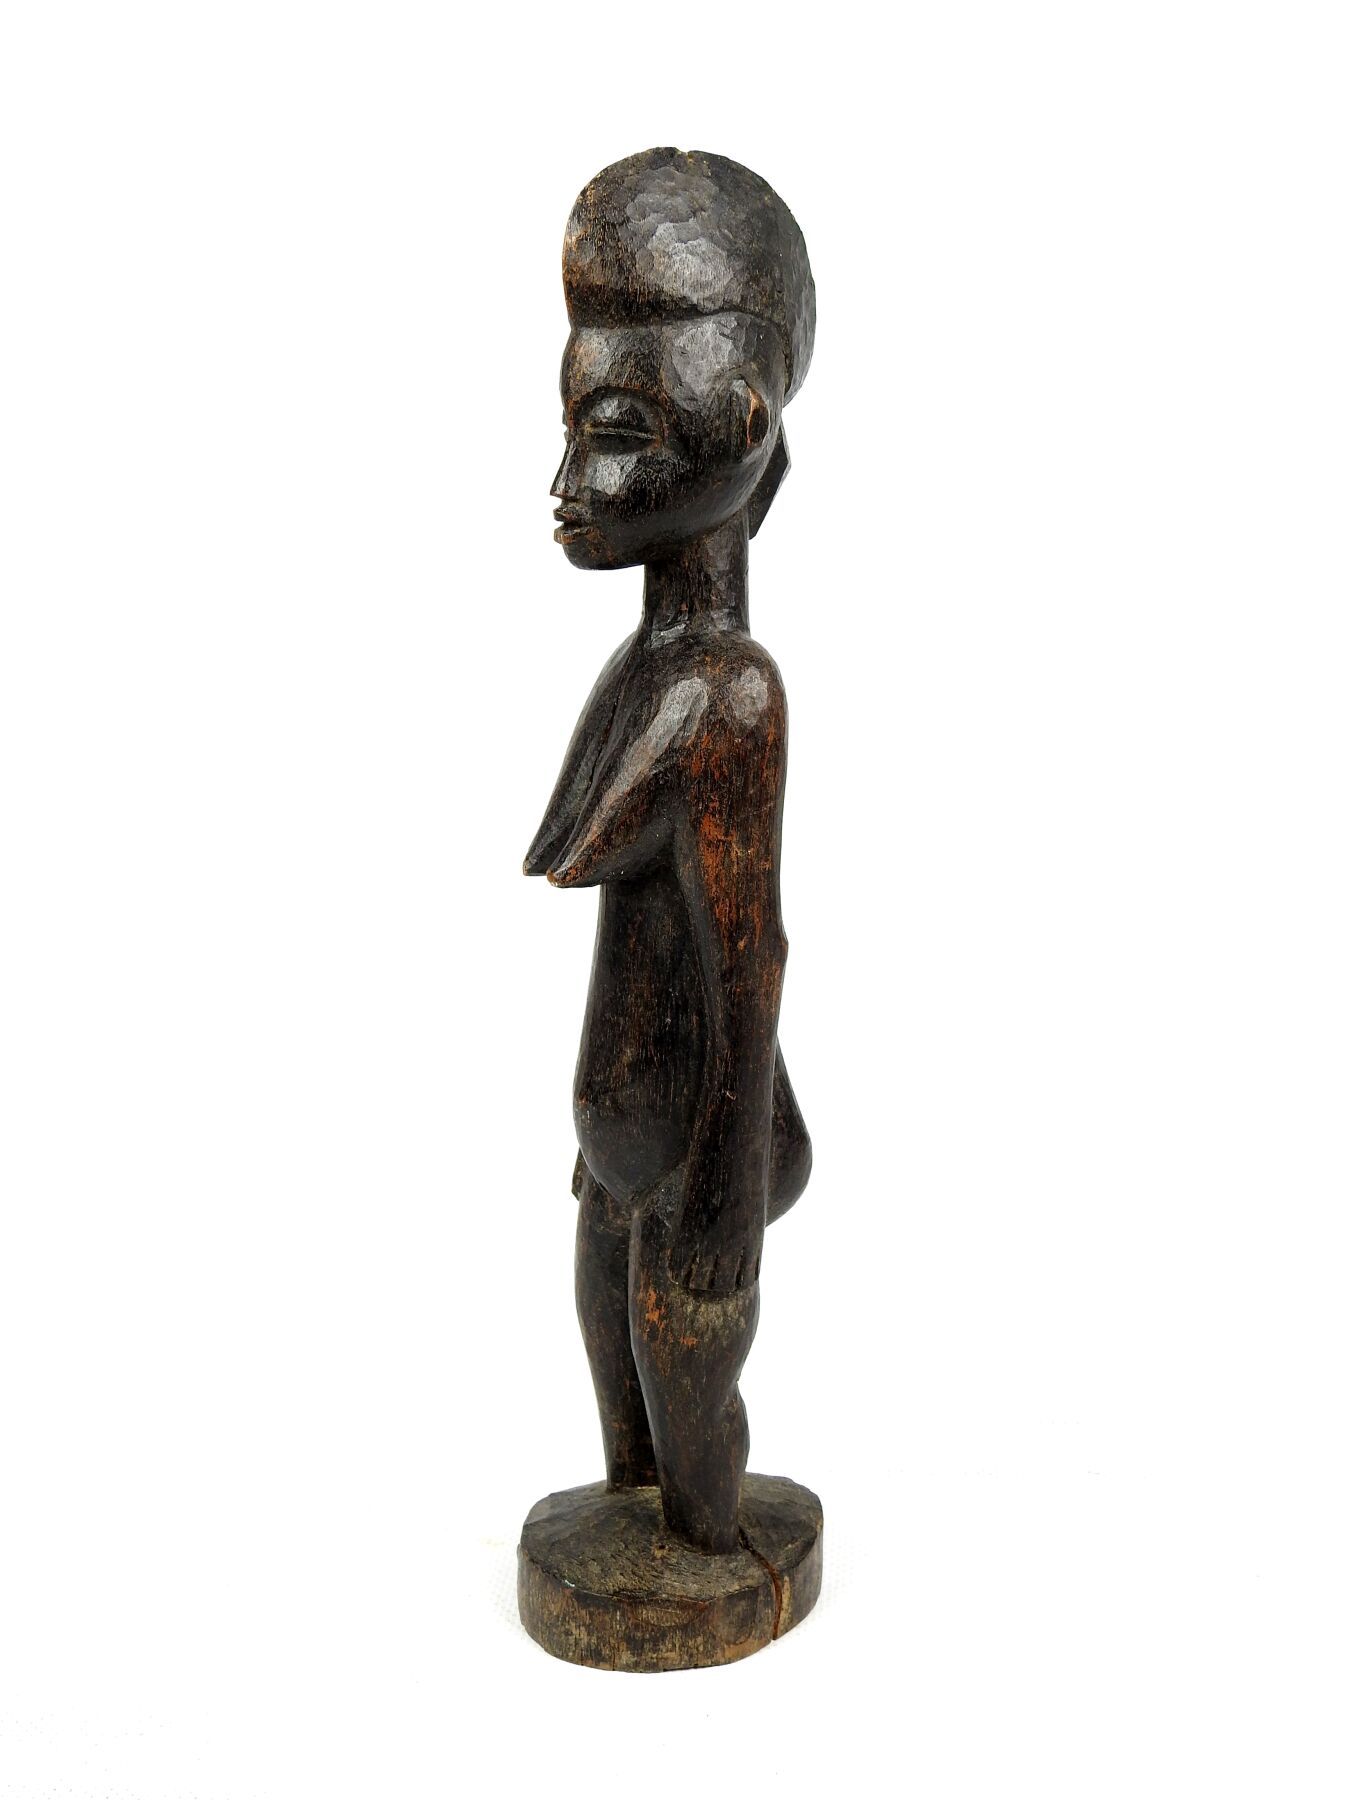 Null 站立的女性雕像，SENOUFO，象牙海岸。
坚硬的木头，棕色-黑色的铜锈。
20世纪上半叶。
高度：35厘米